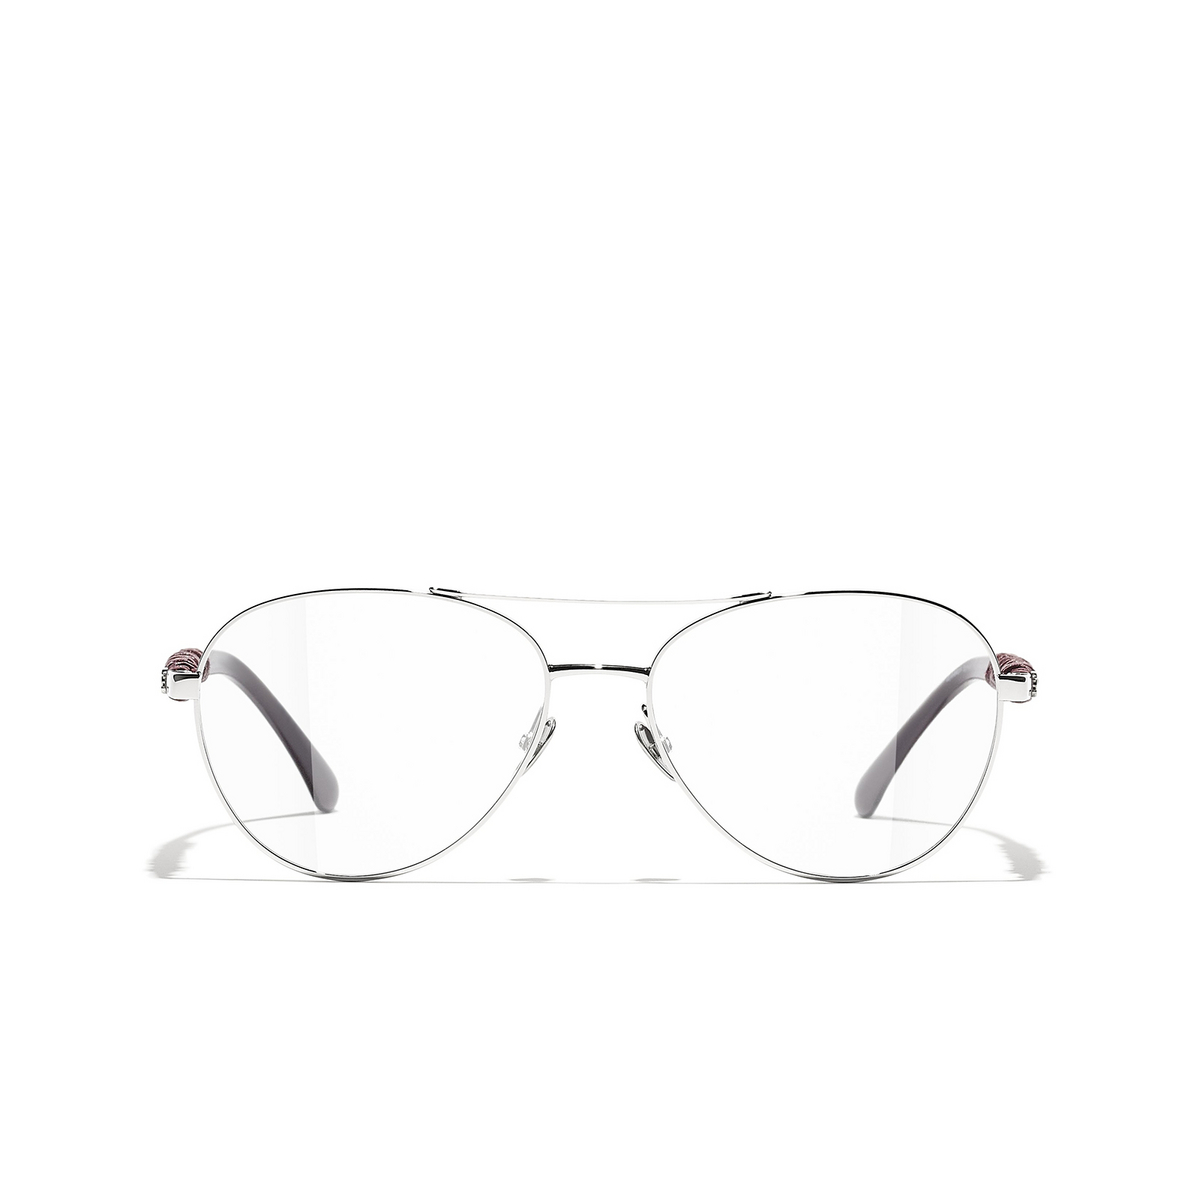 CHANEL pilot Eyeglasses C124 Silver & Burgundy - front view